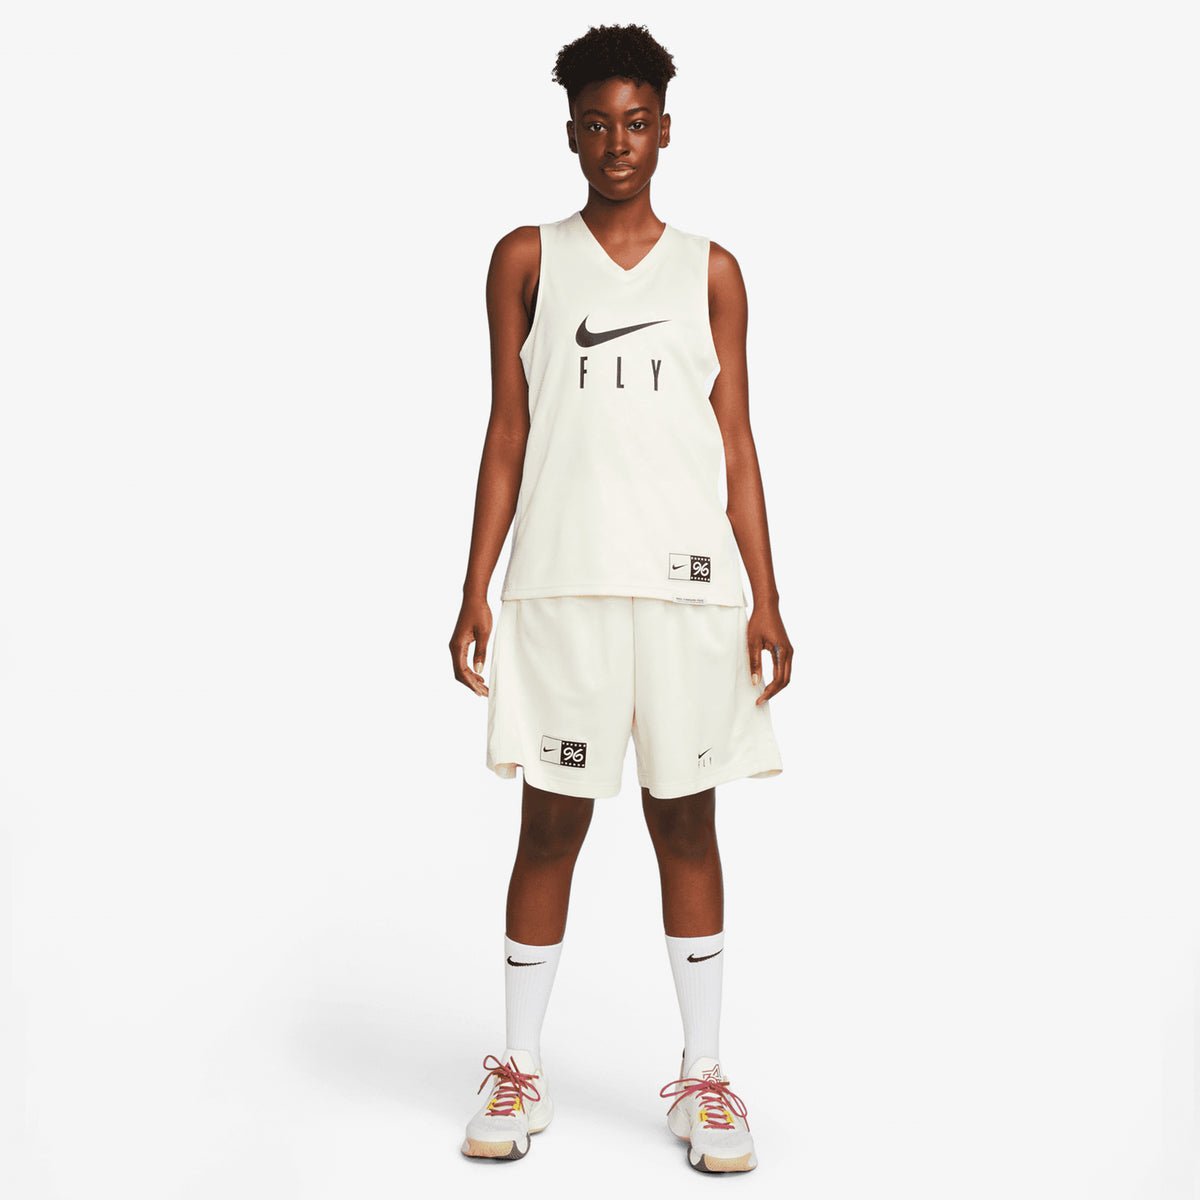 Nike Swoosh Fly Women's Dri-FIT Reversible Basketball Tank Top